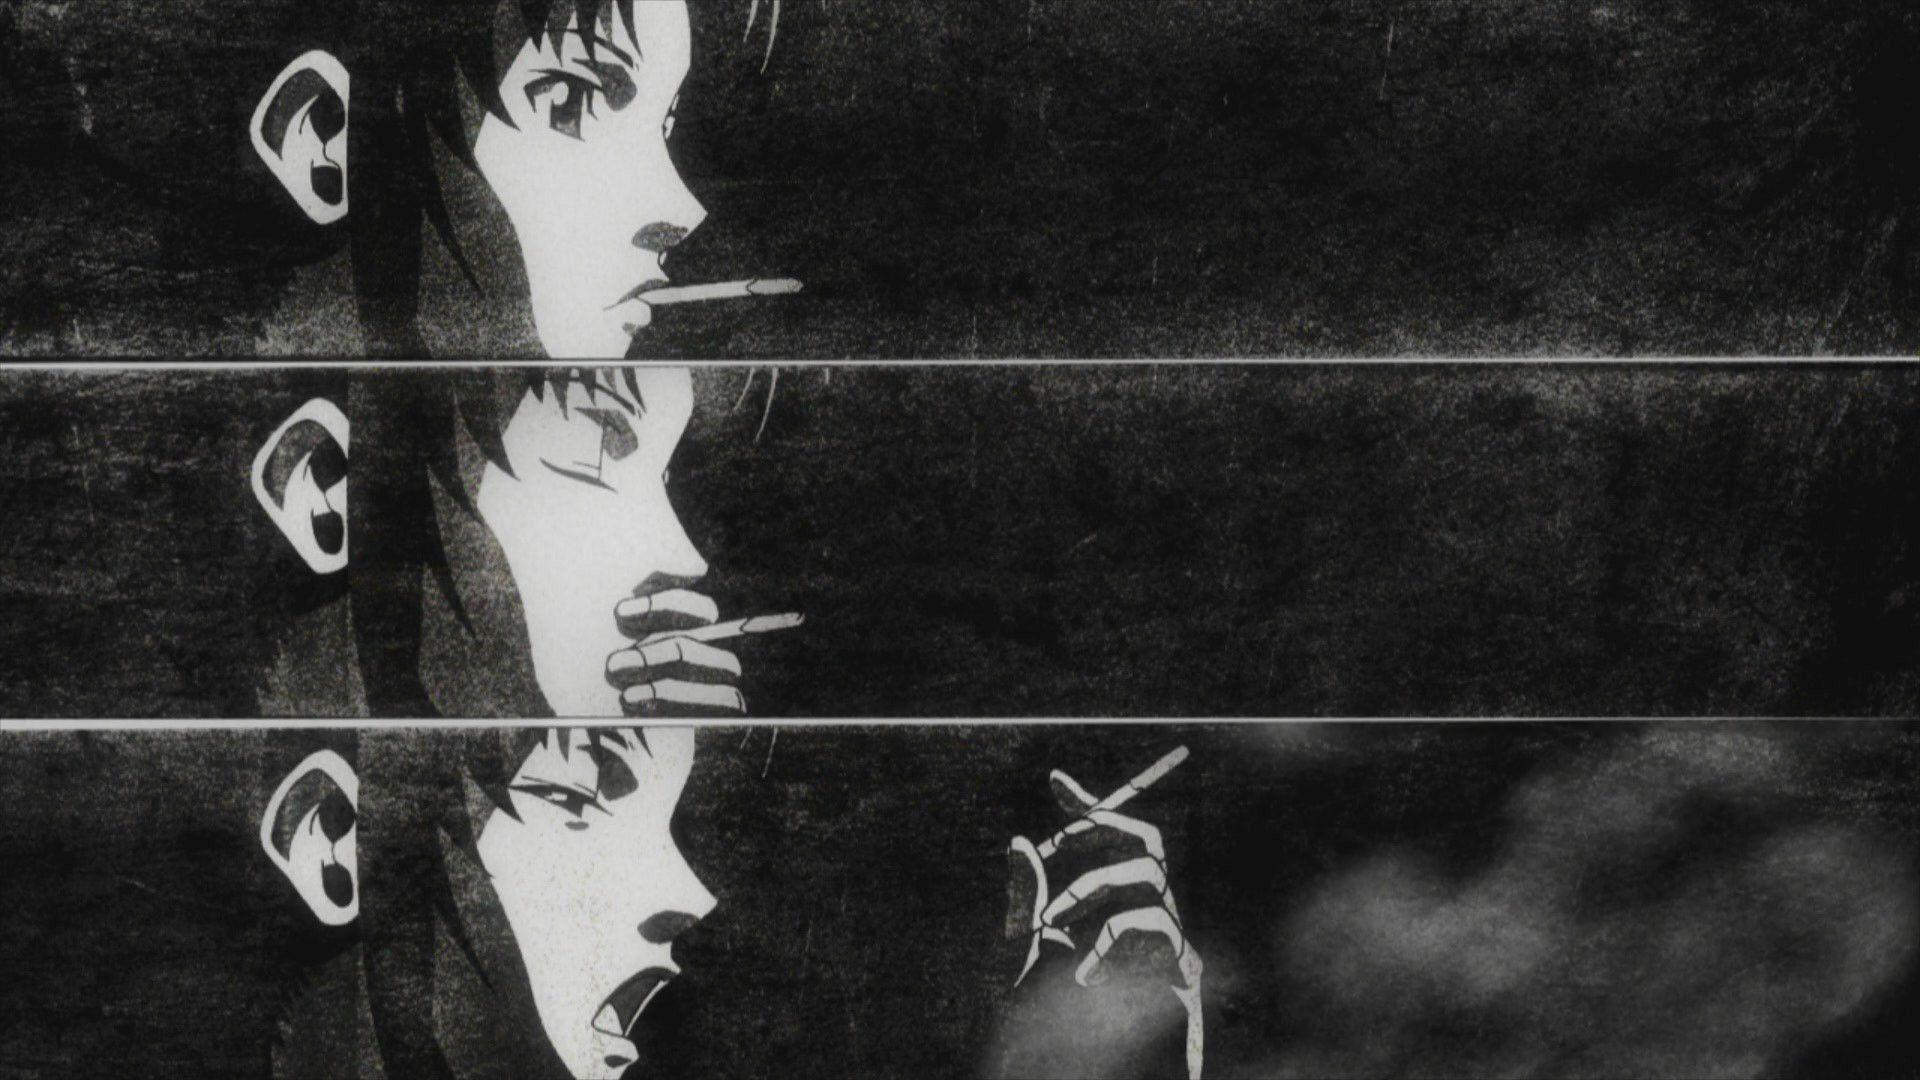 Dark Anime Aesthetic Wallpapers - Top Free Dark Anime Aesthetic